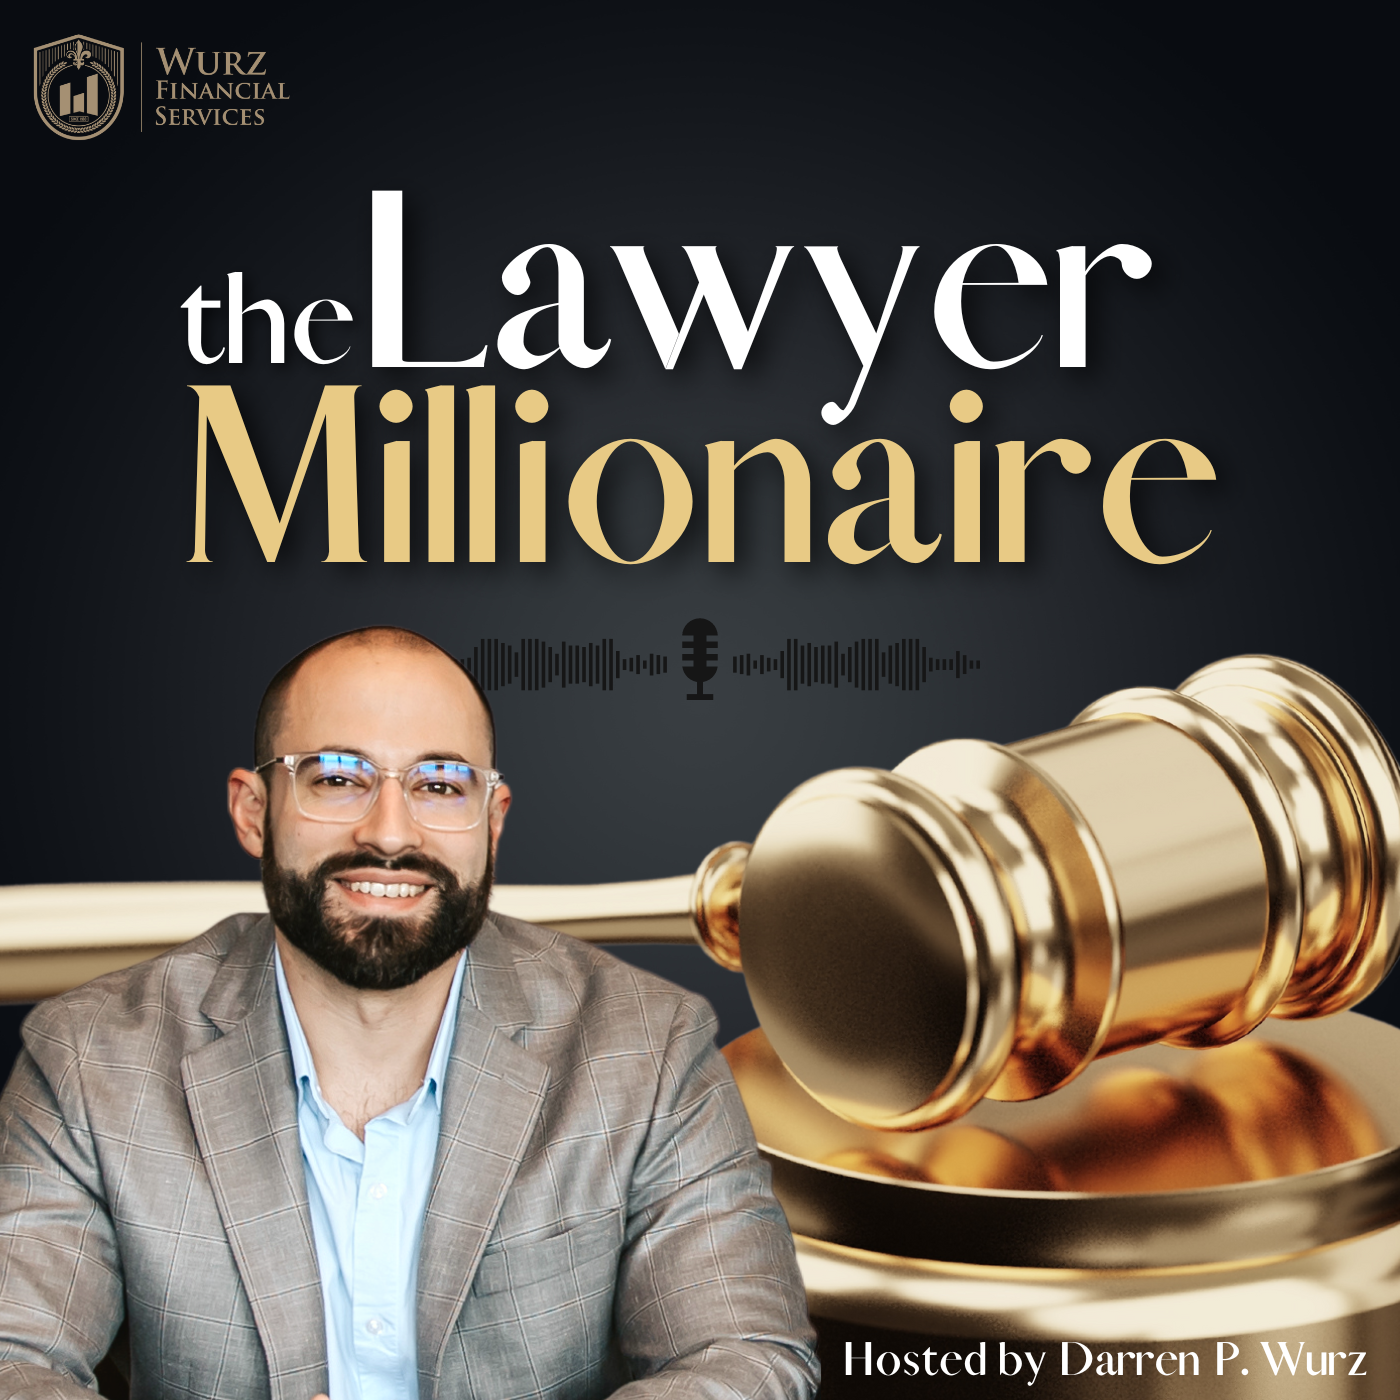 The Lawyer Millionaire